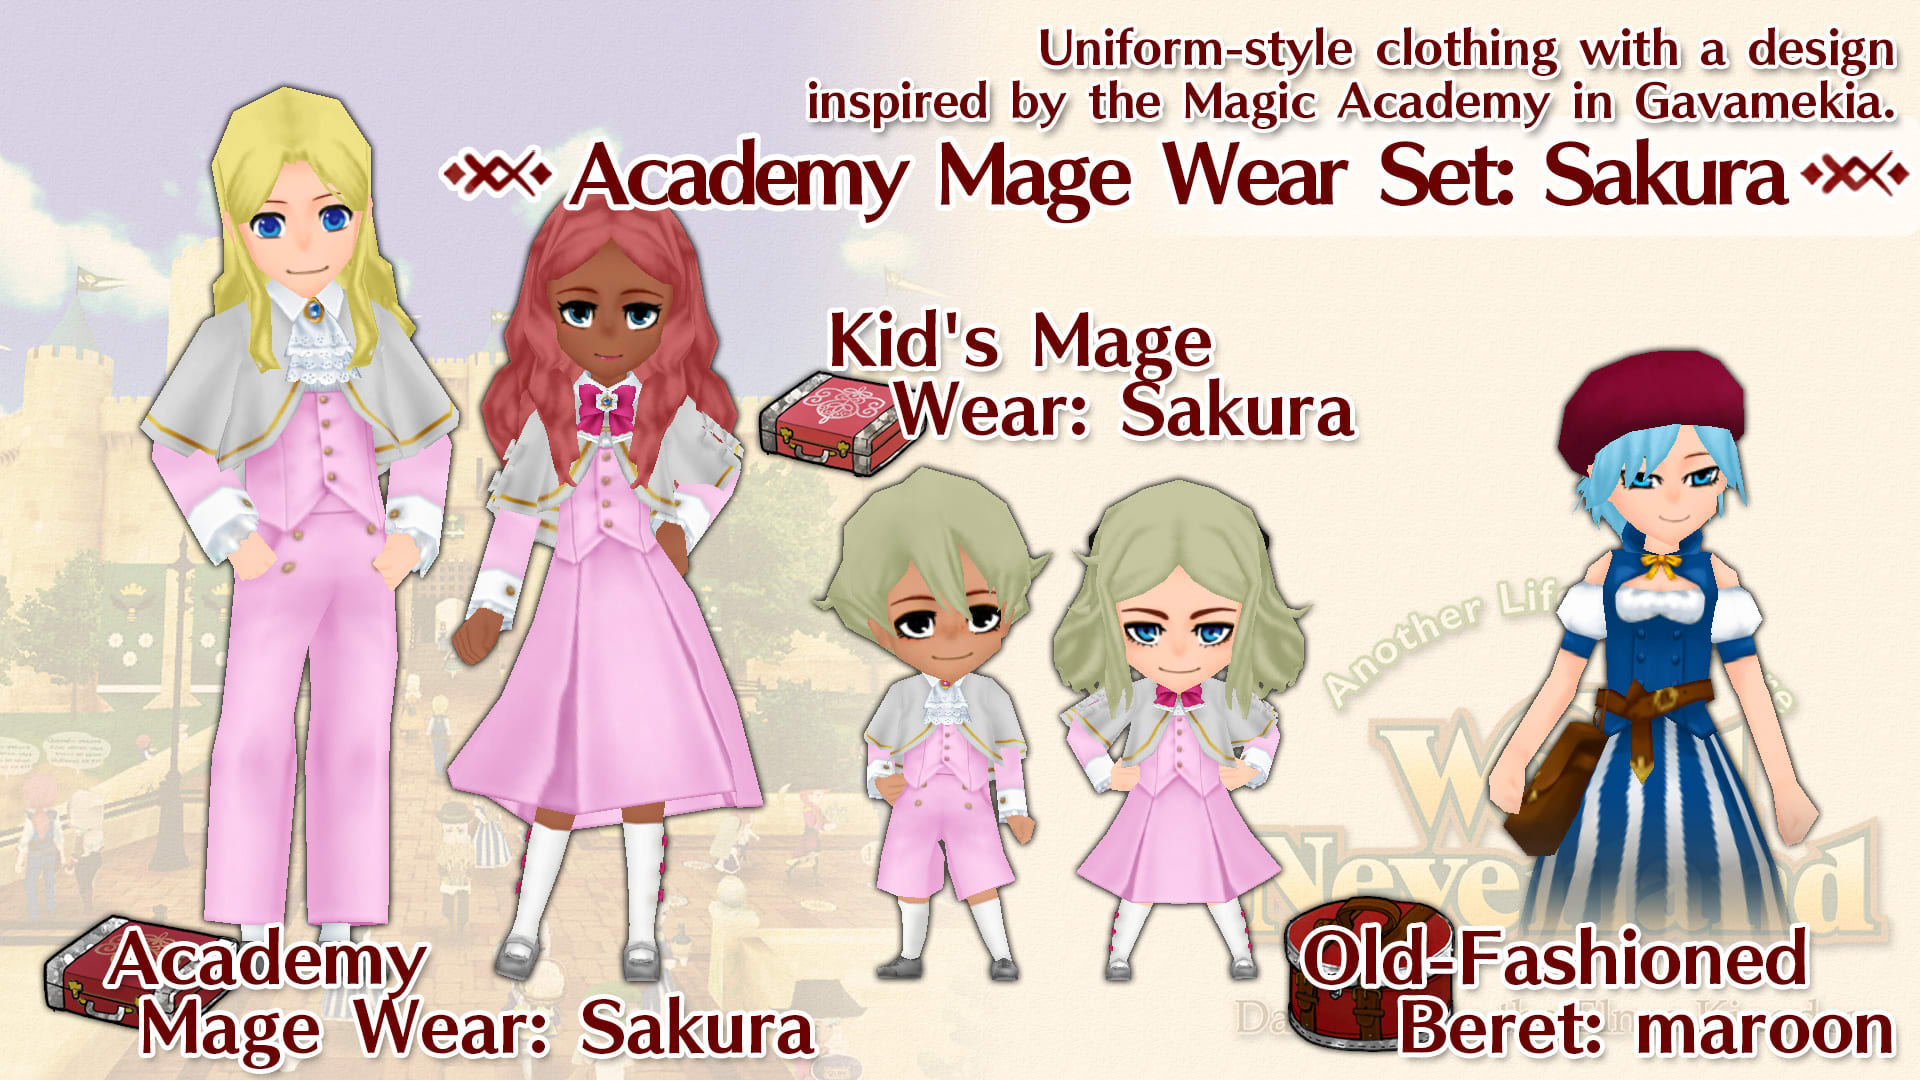 Academy Mage Wear Set: Sakura